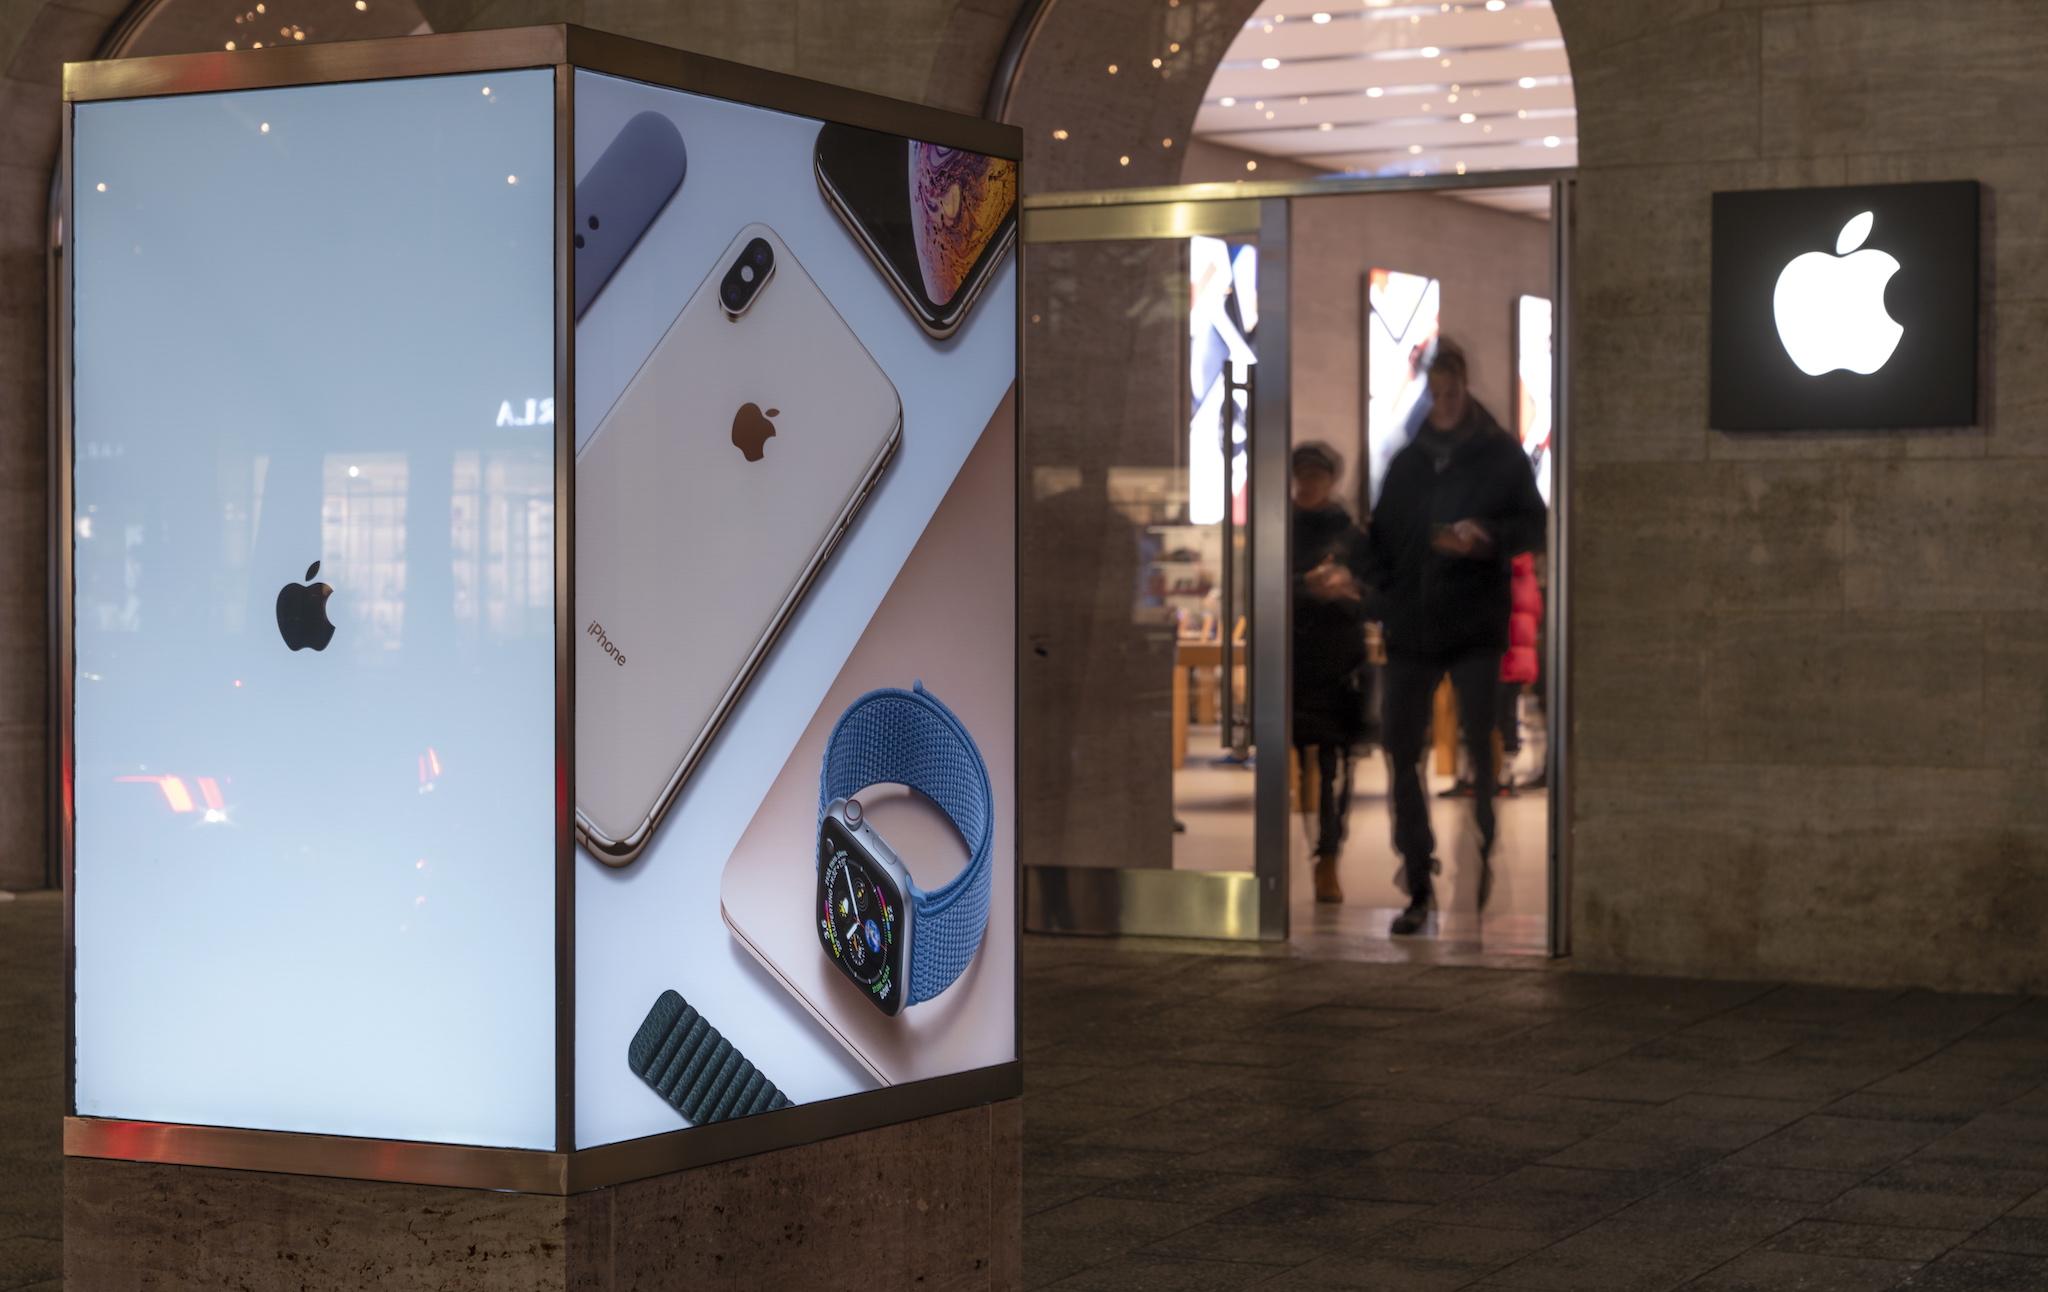 Customers leave the Apple store in Berlin, Germany, 20 December 2018